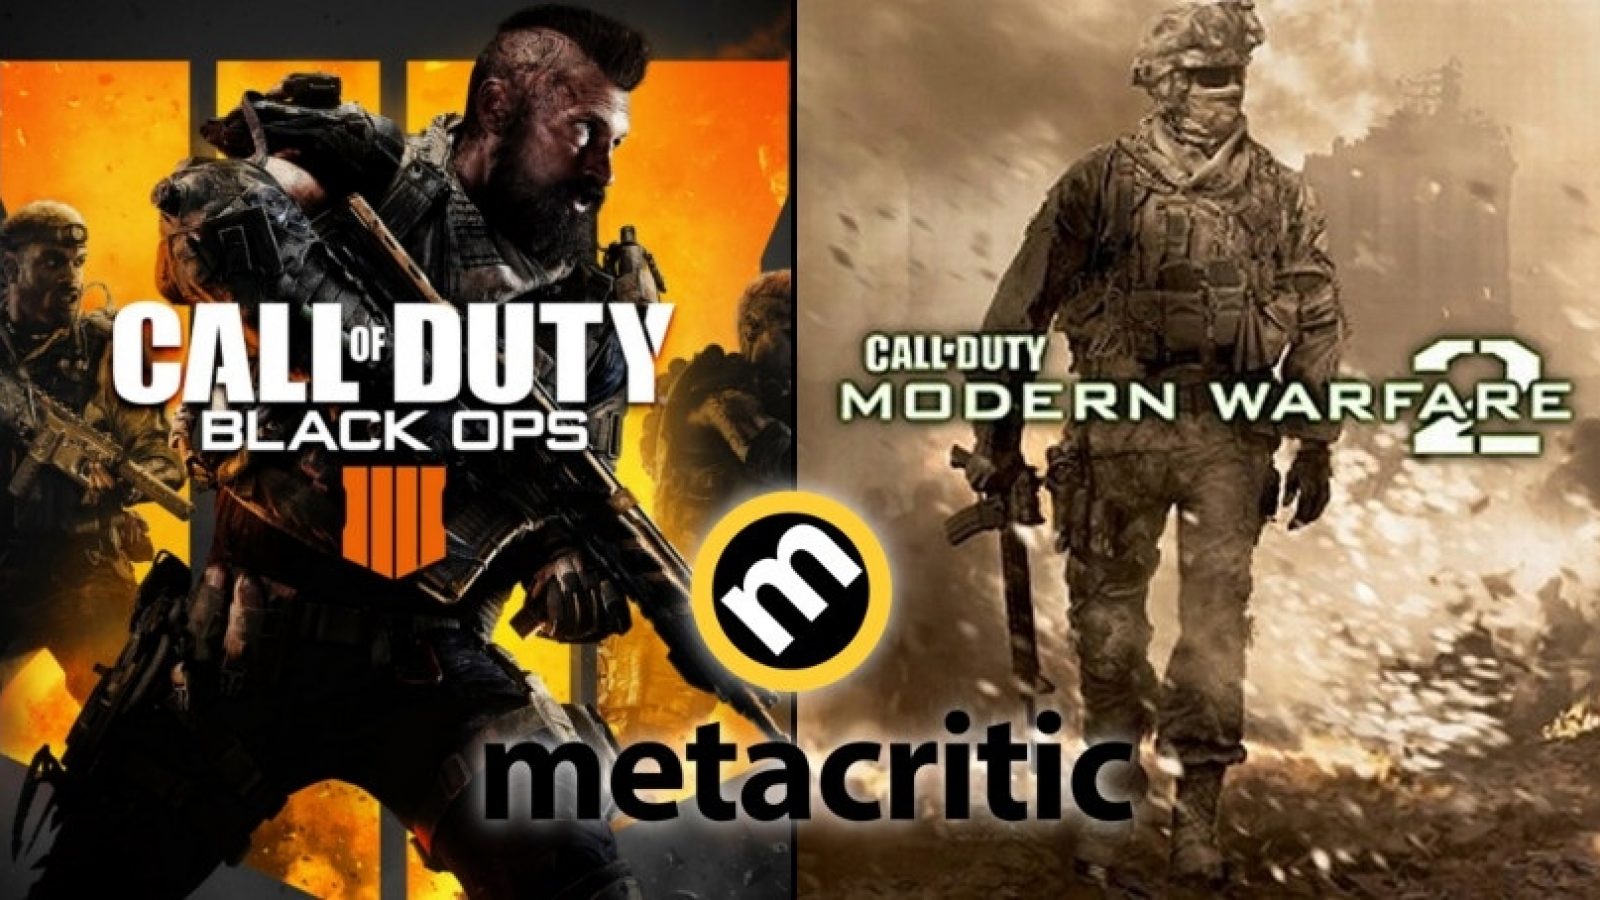 Call of Duty: Metacritic Warfare